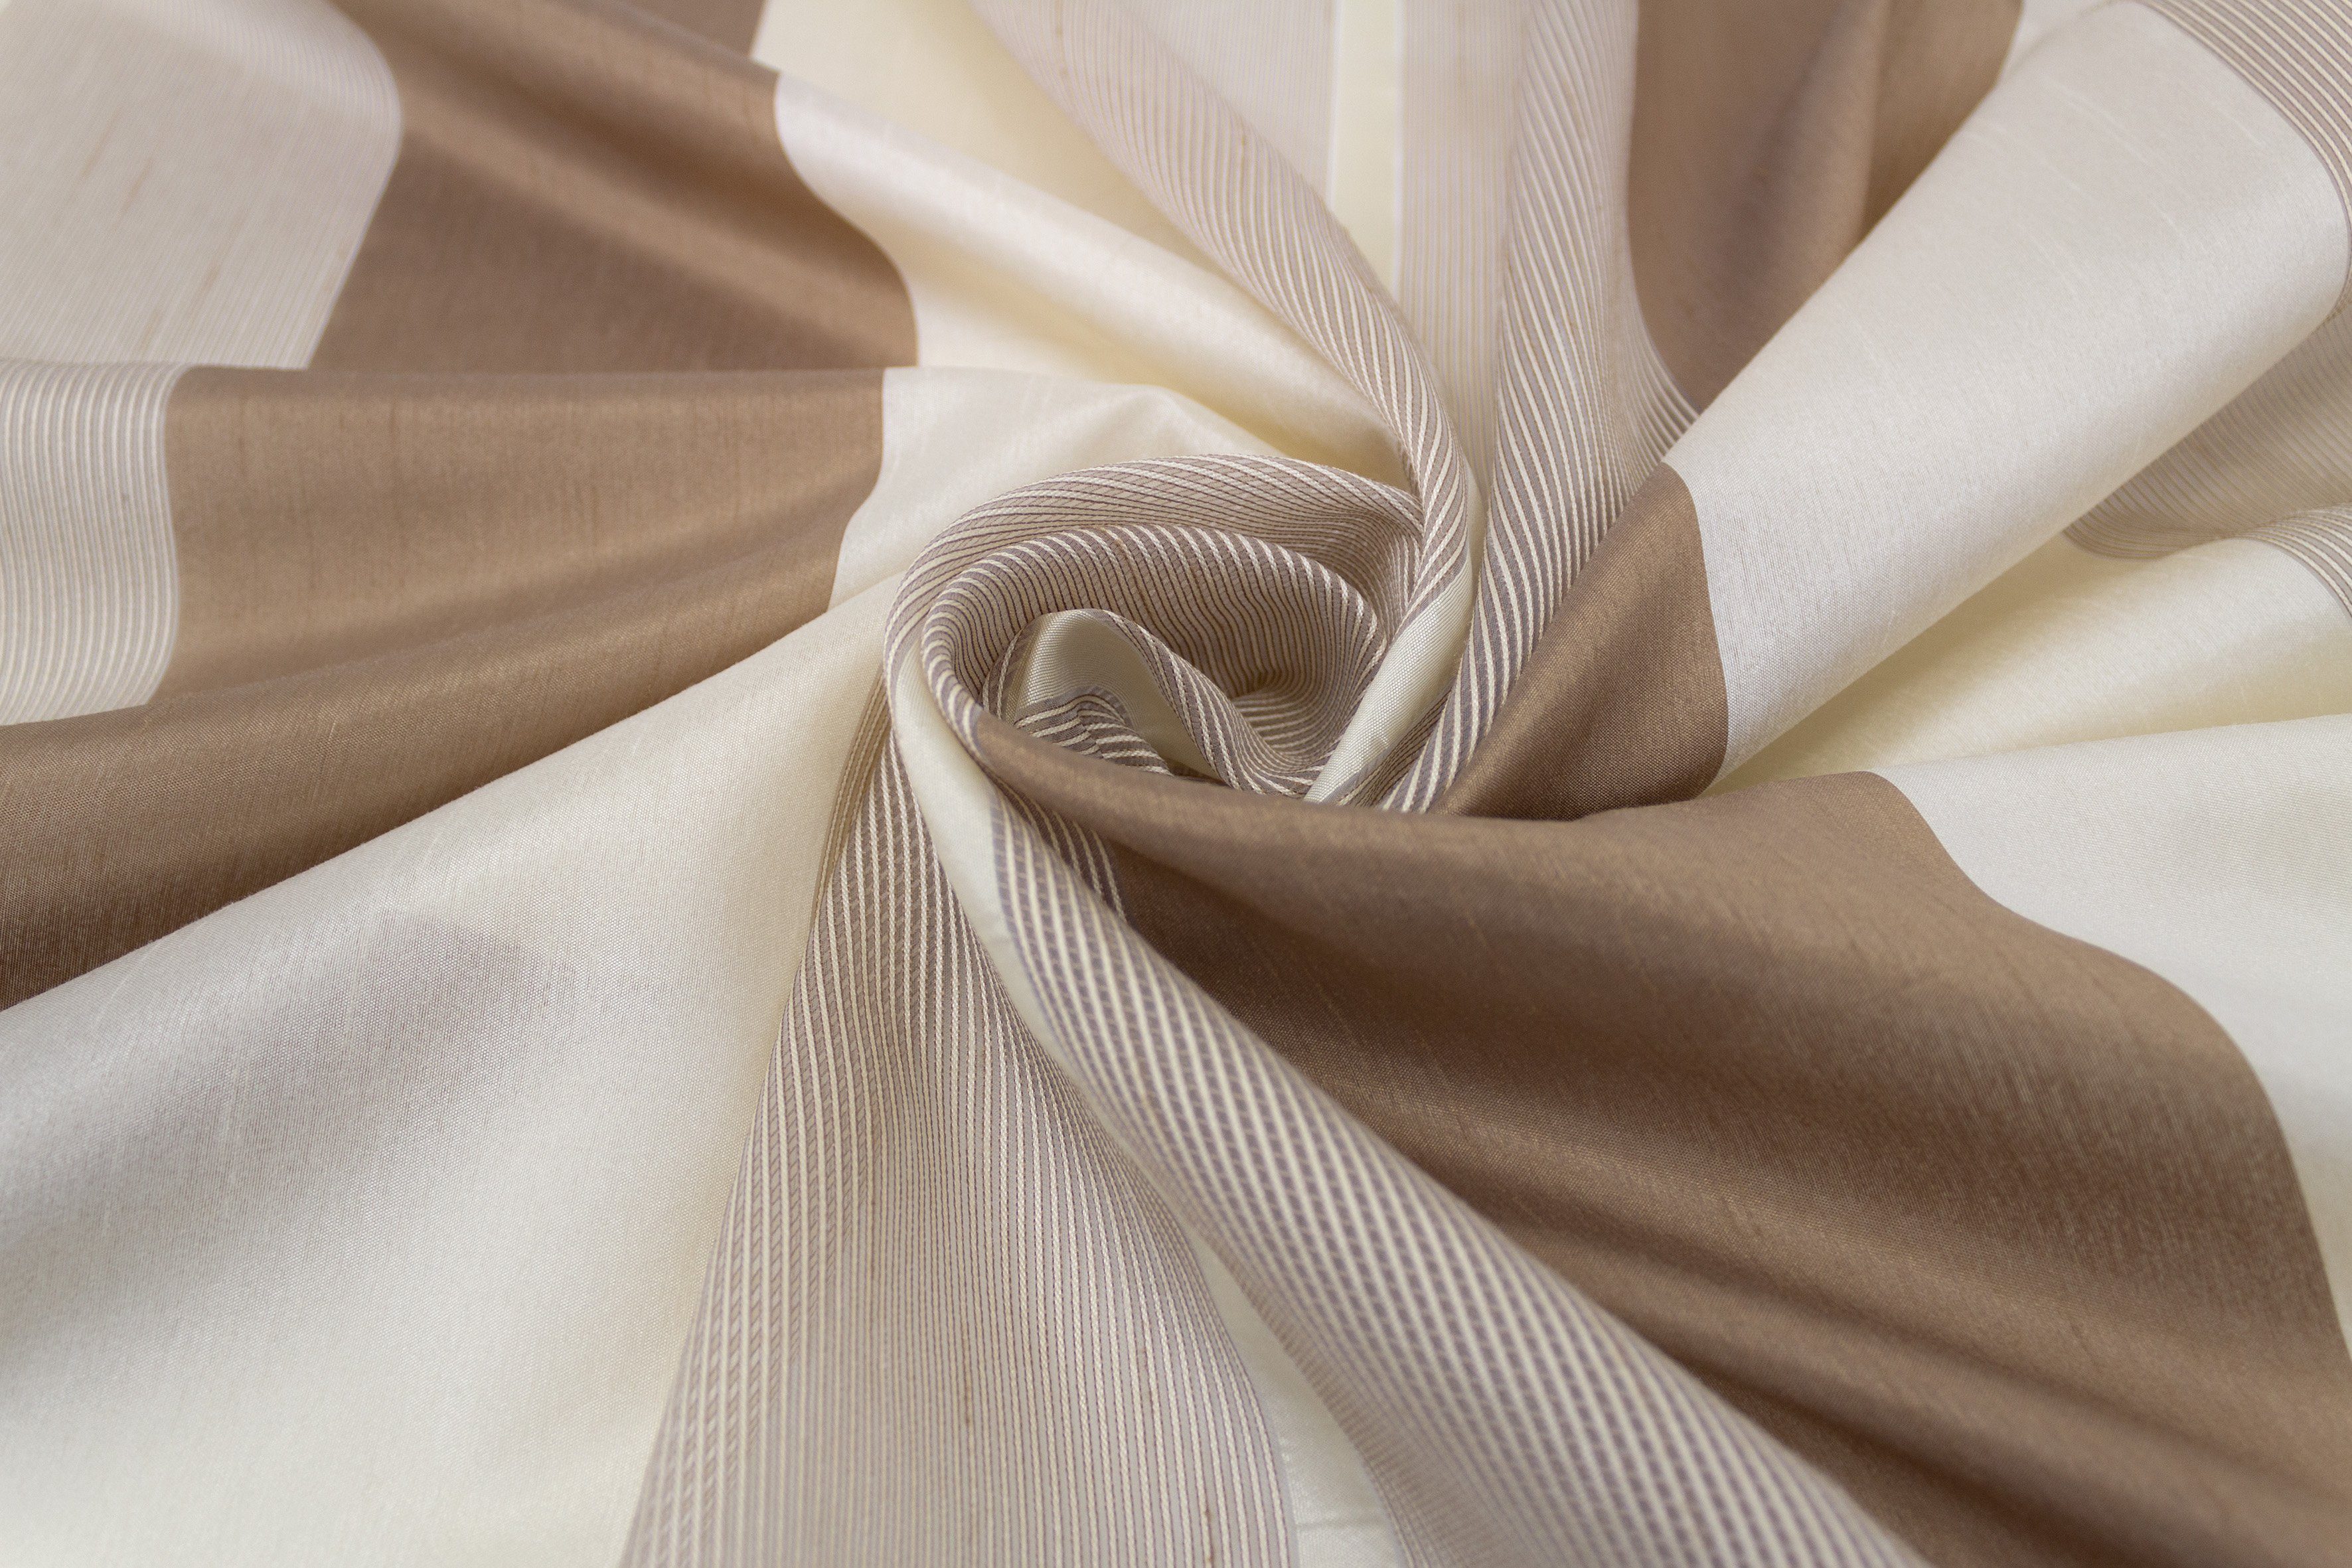 St), Schal halbtransparent, Kräuselband Polyester, beige-braun Vorhang Solea, VHG, (1